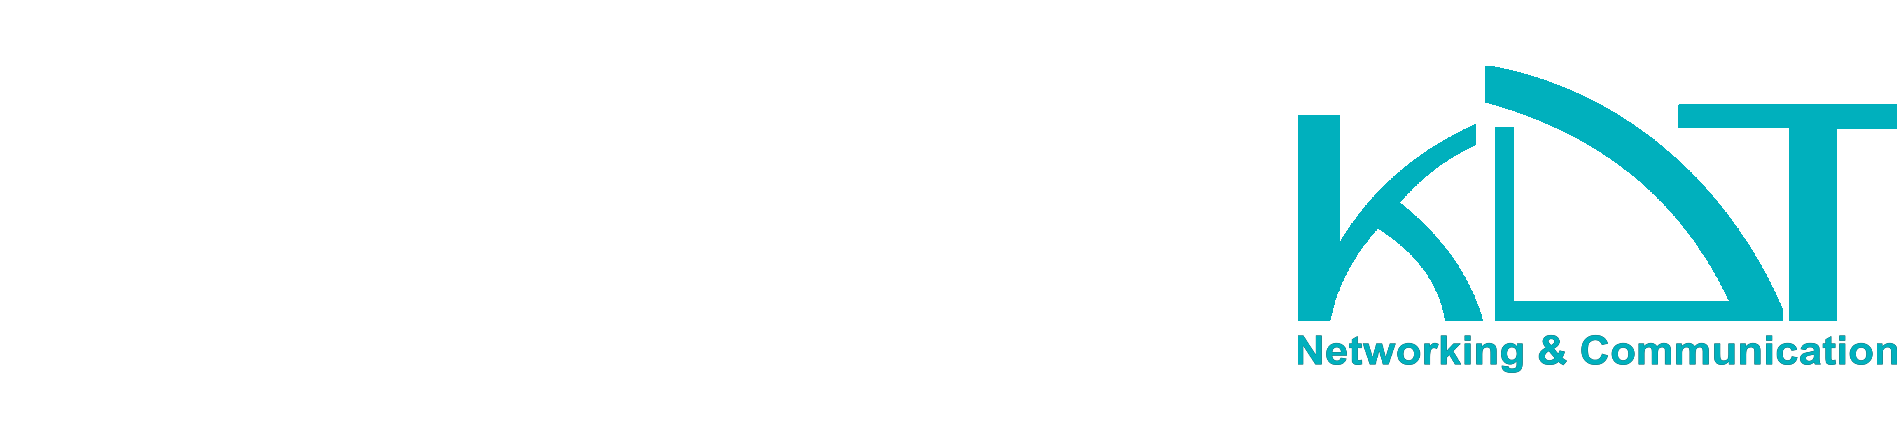 kdt-logo-lg